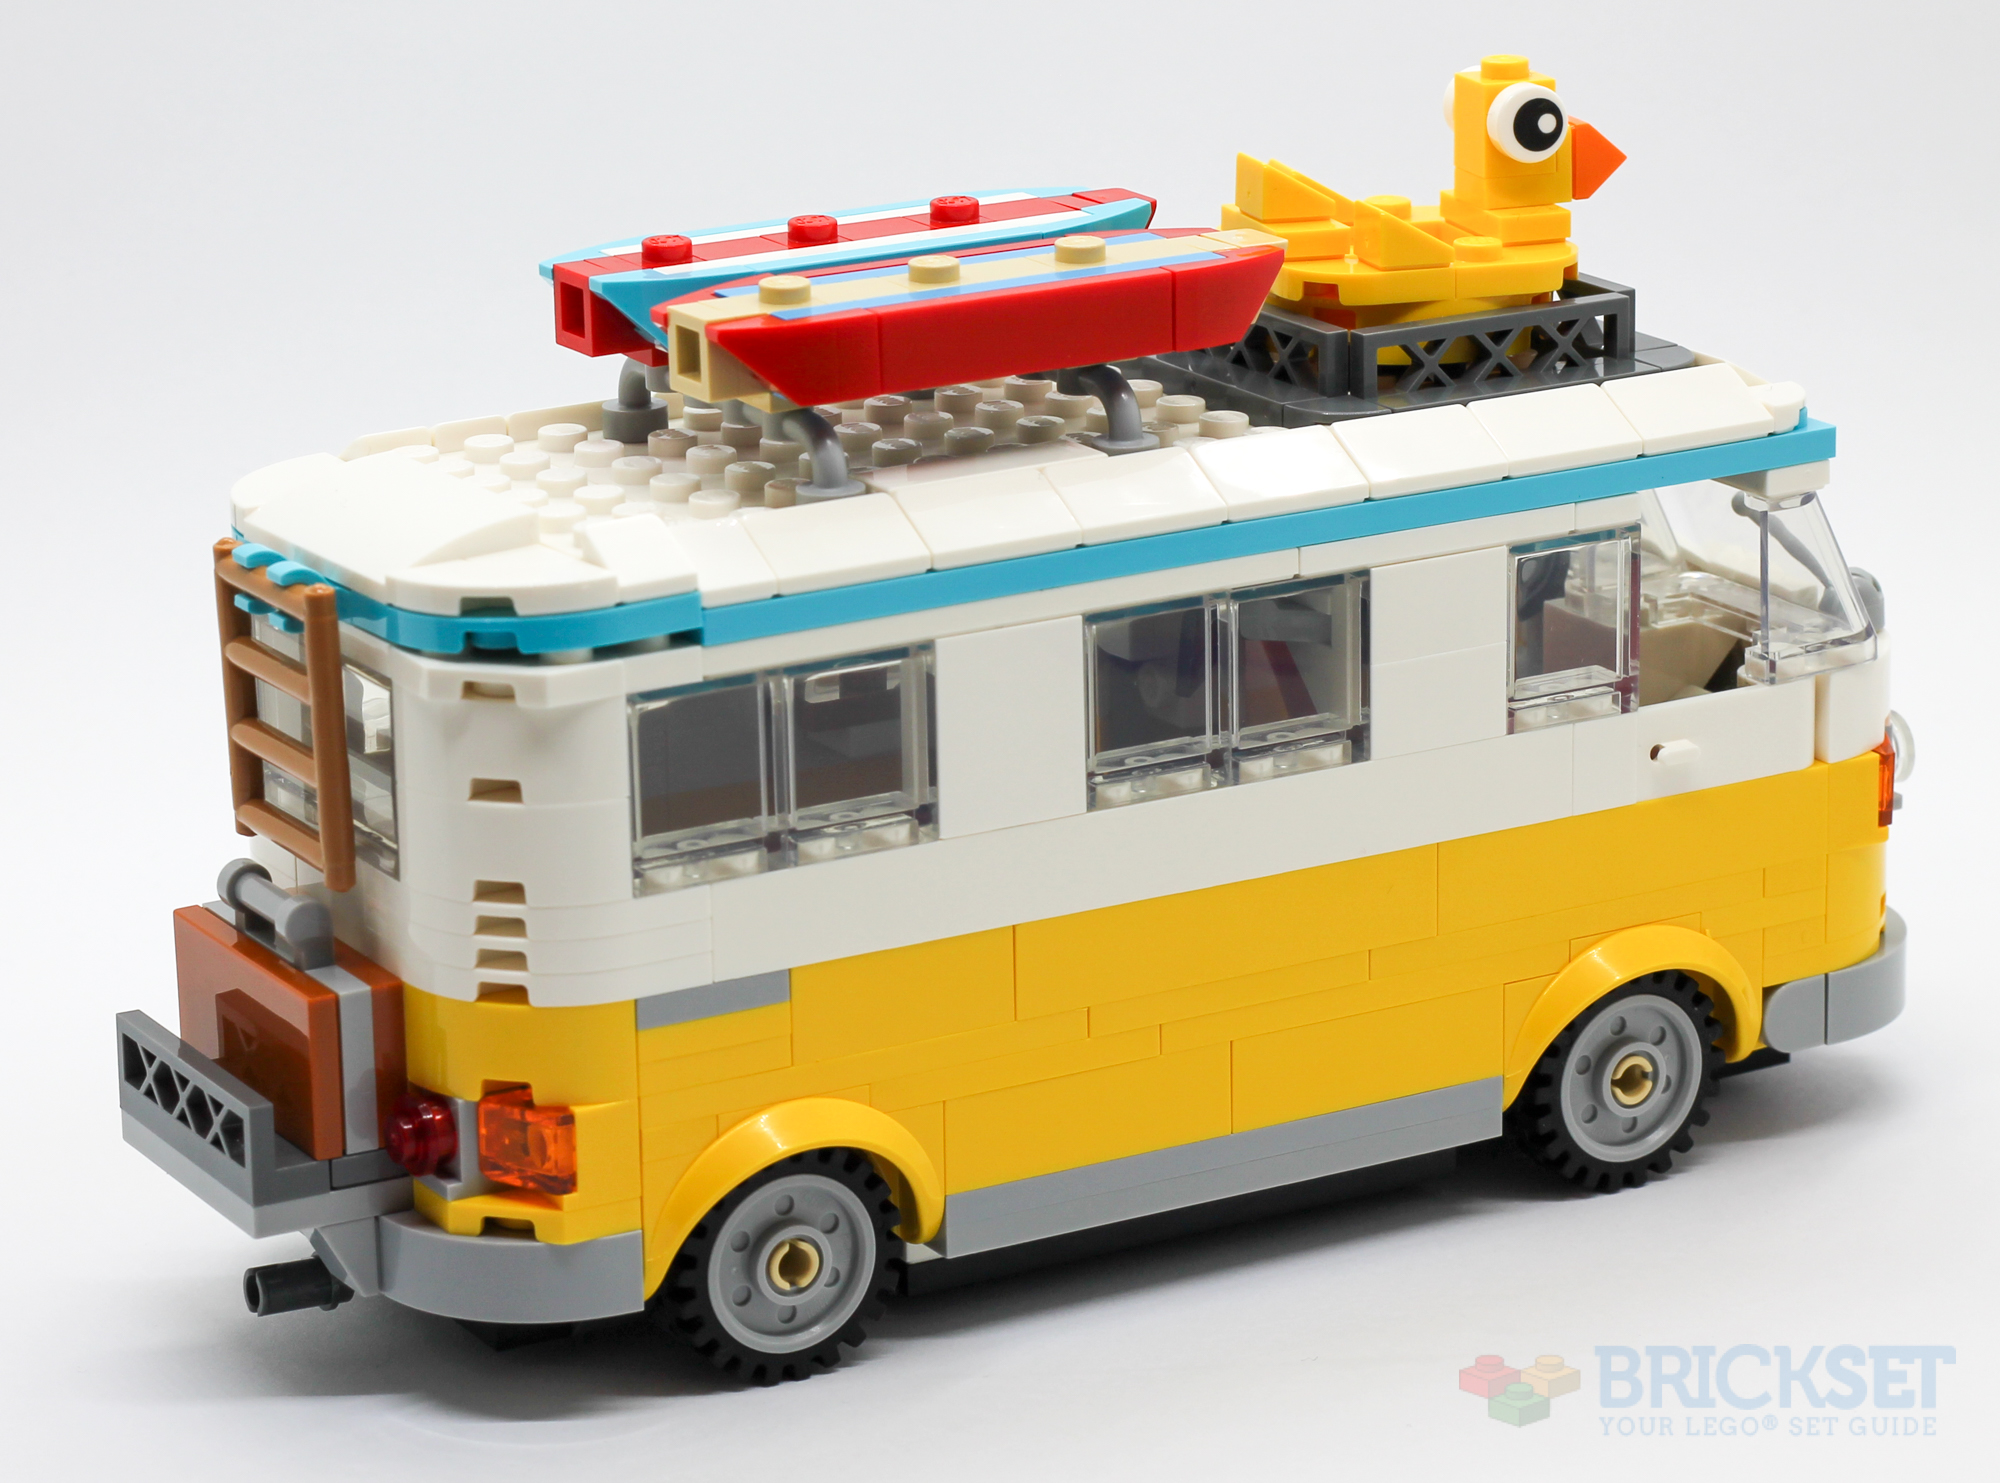 LEGO Creator 3 in 1 Beach Camper Van Toy Summer Set 31138